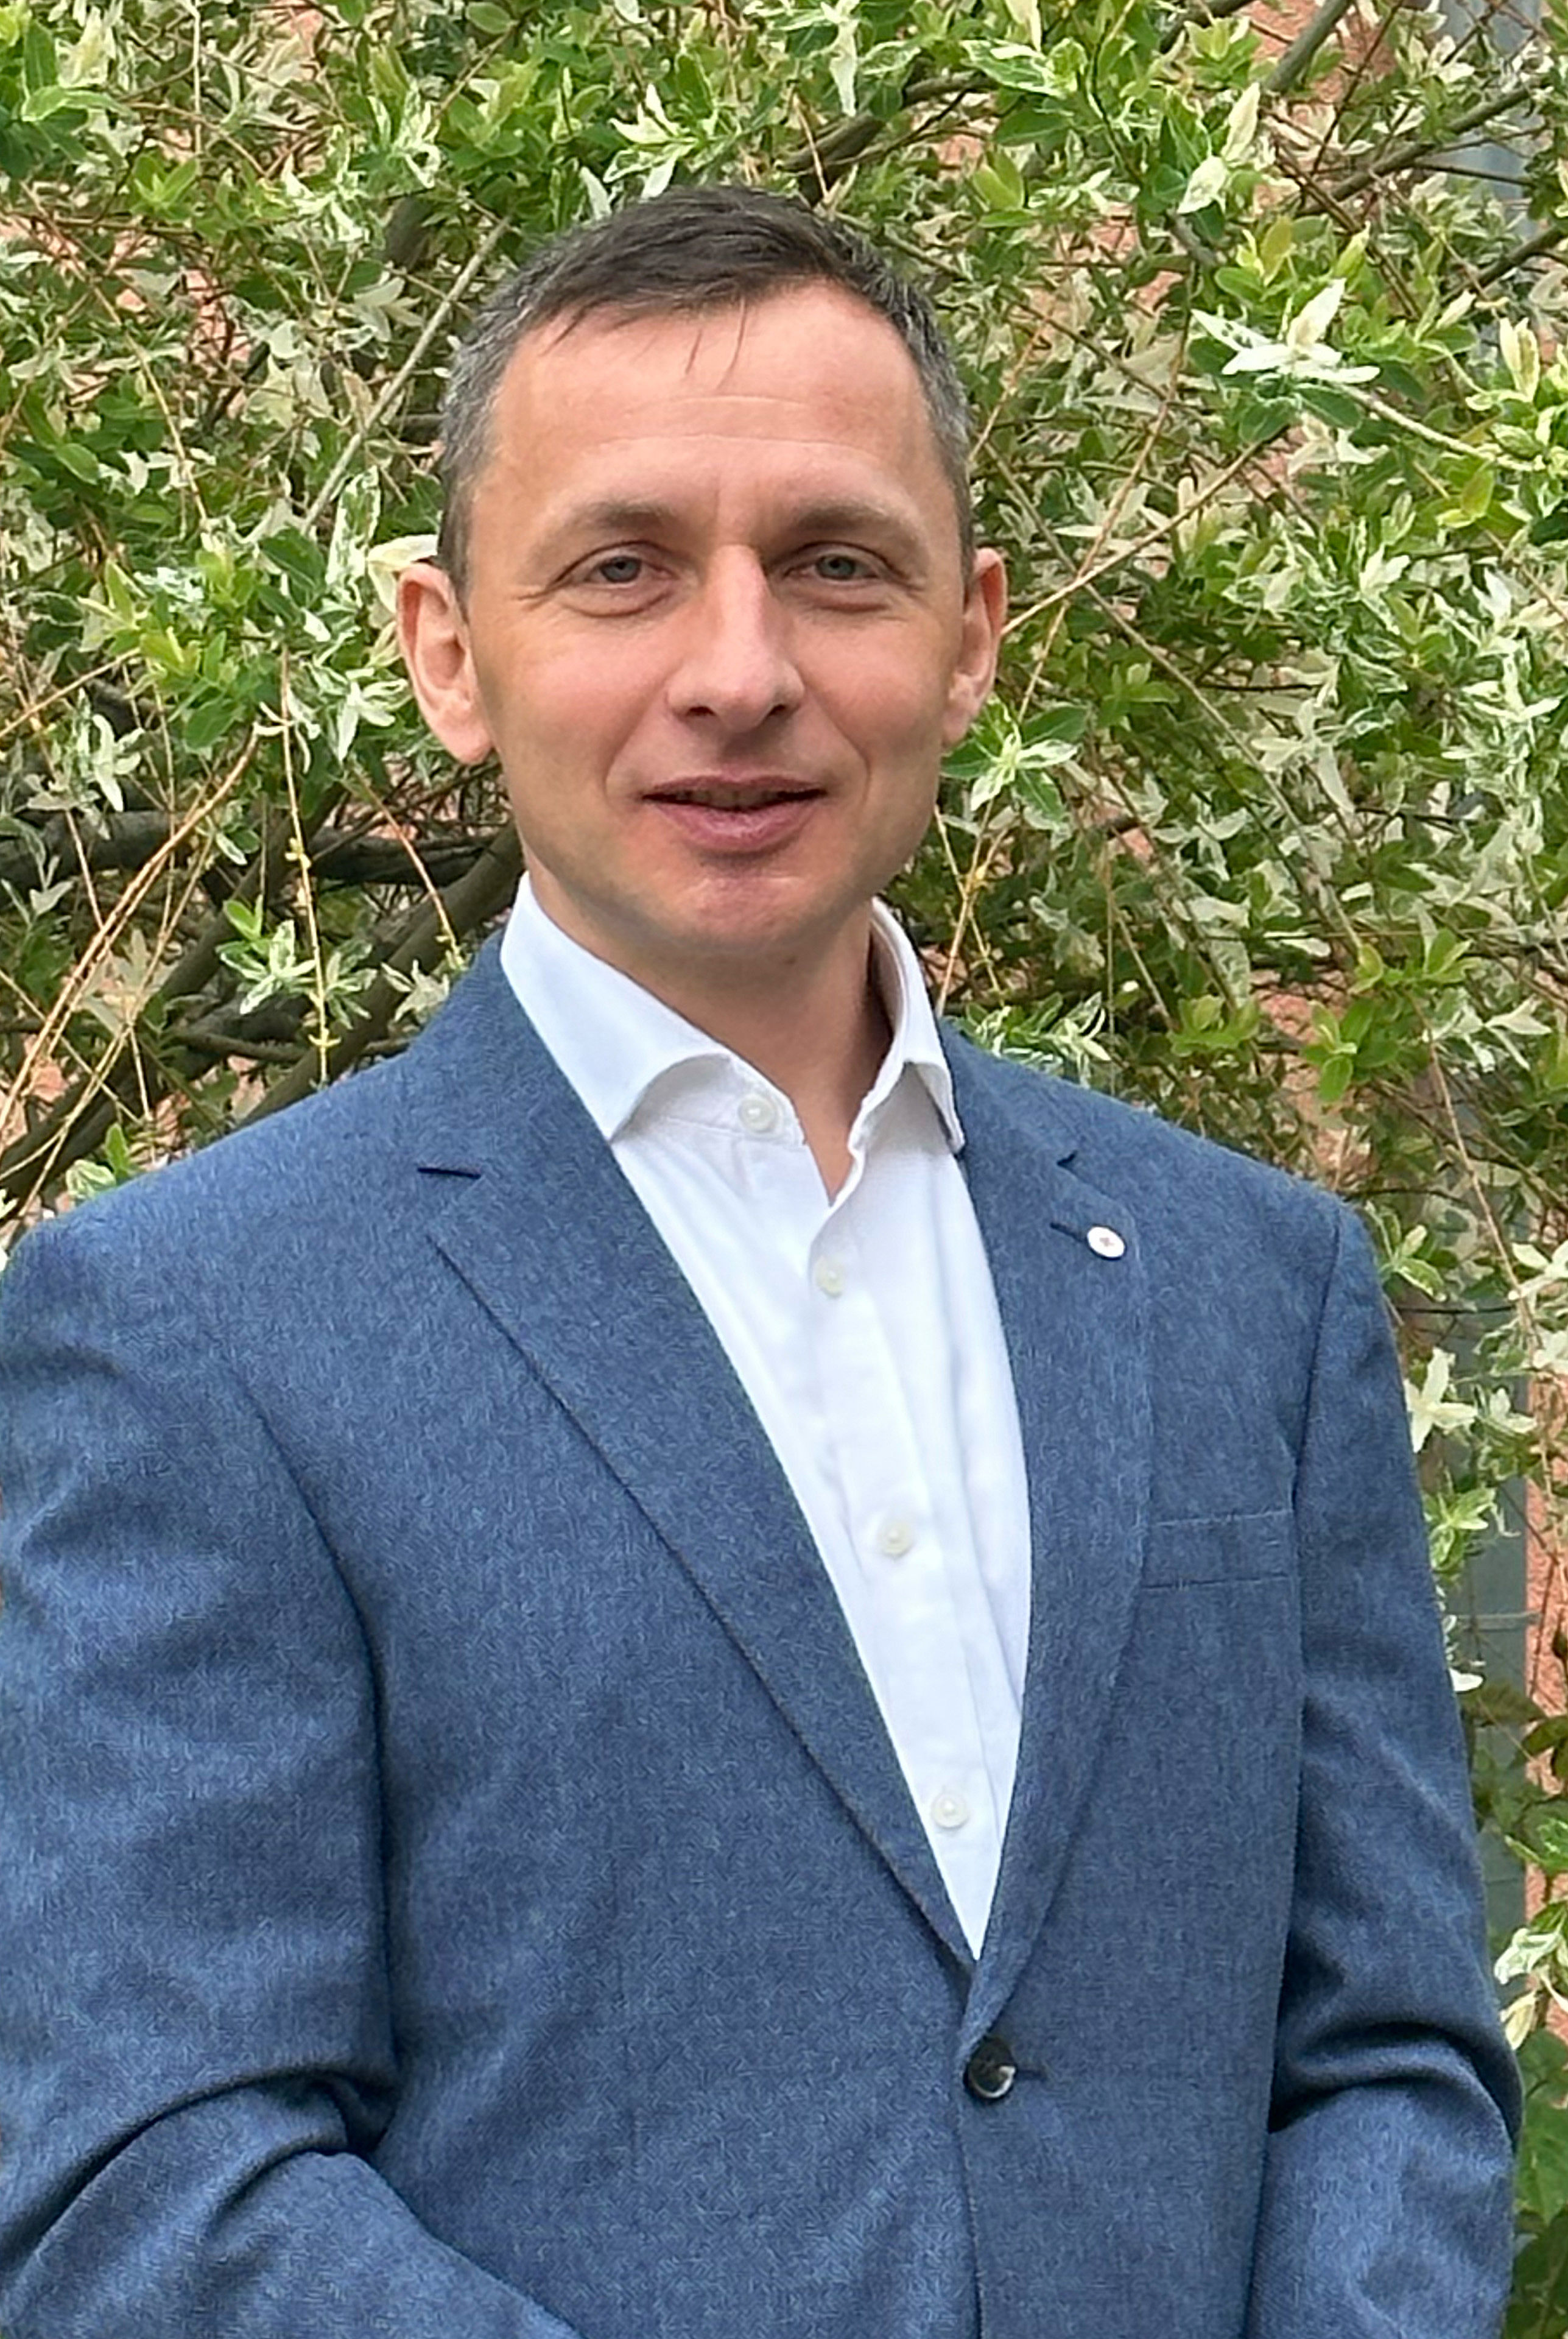 Bernd Bergmann, Geschäftsführer DRK Kreisverband Quedlinburg/Halberstadt e.V.